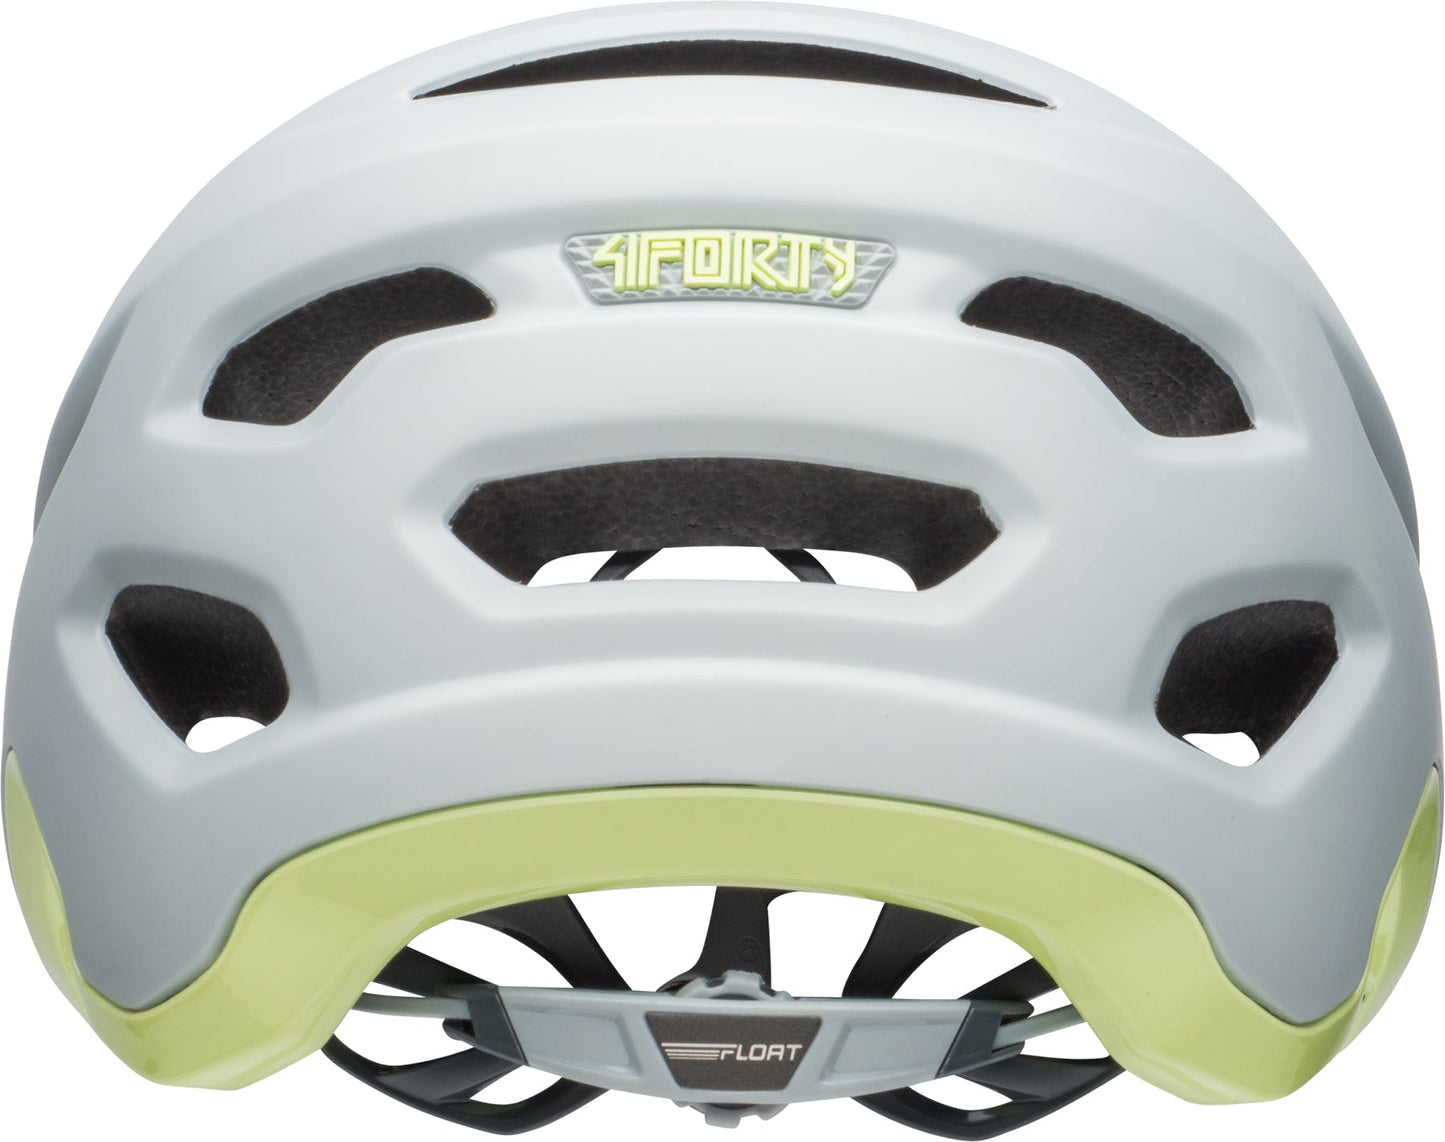 BELL 4FORTY Helmet-Matt light gray and light yellow-XL (61-65cm) / BELL 4FORTY HELMET-MAT ​​SMK/PEAR-XL